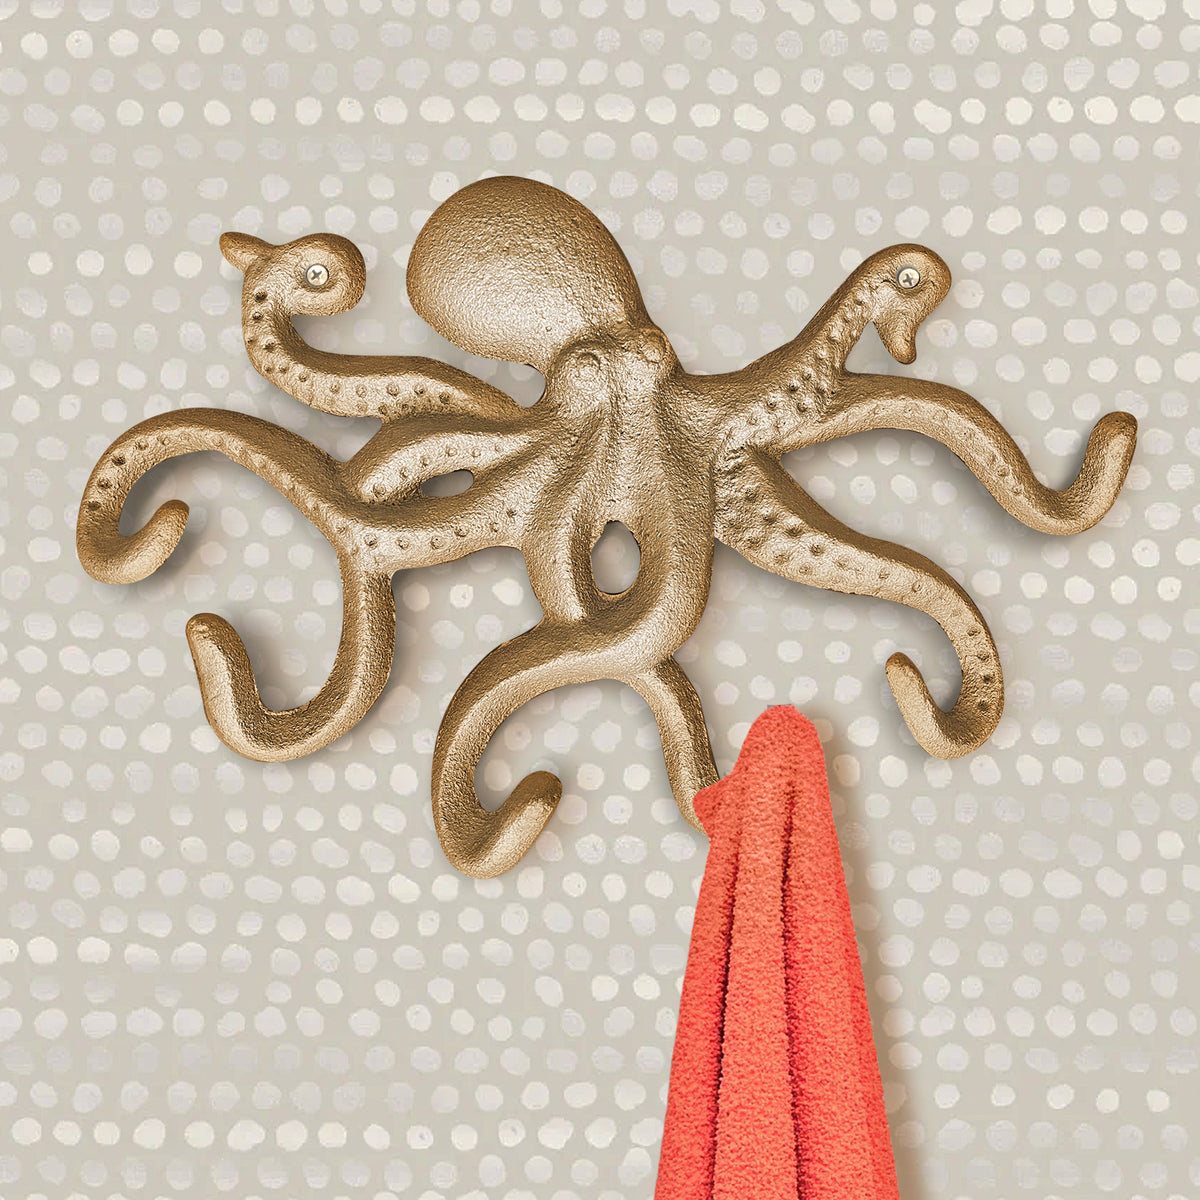  Sumnacon 6 Inch Cast Iron Octopus Decorative Coat Hook